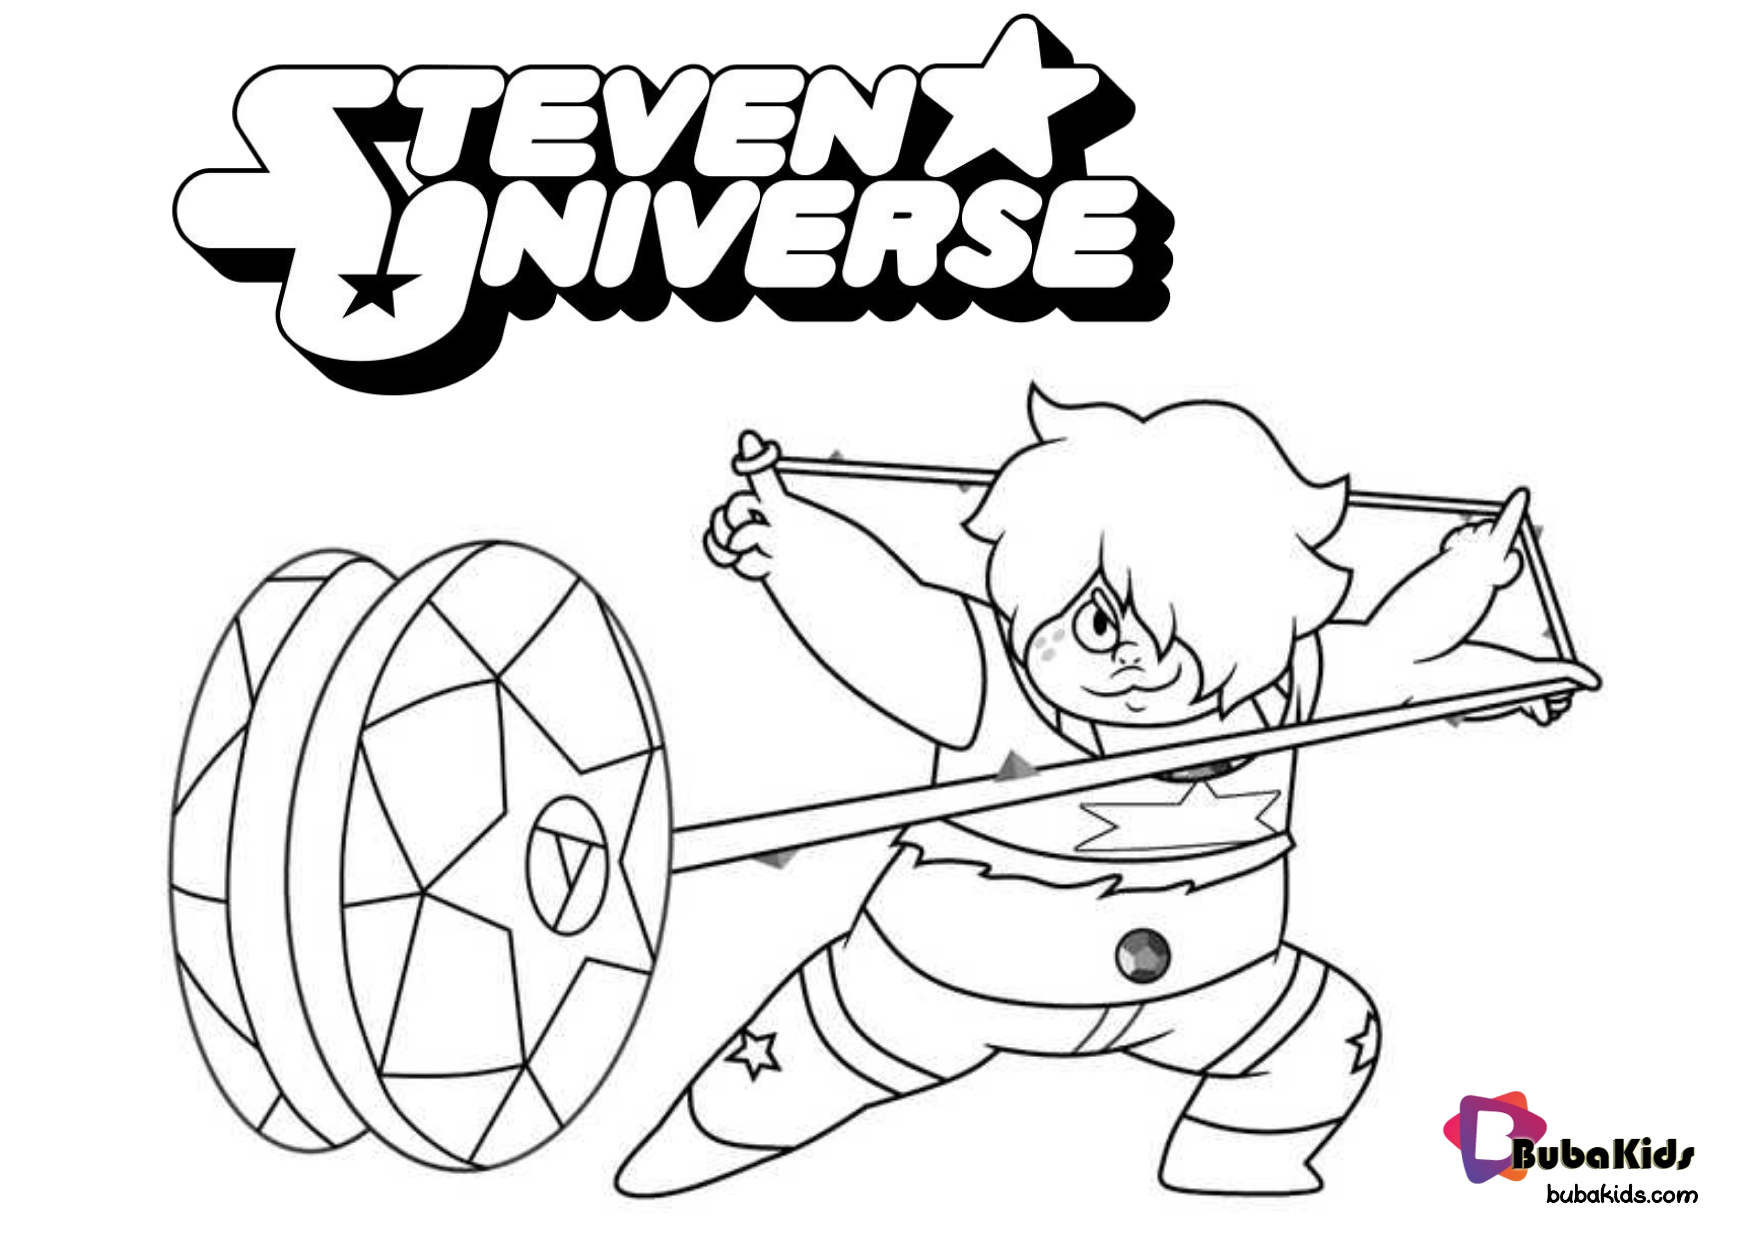 Smoky Quartz Steven Universe coloring page. Wallpaper